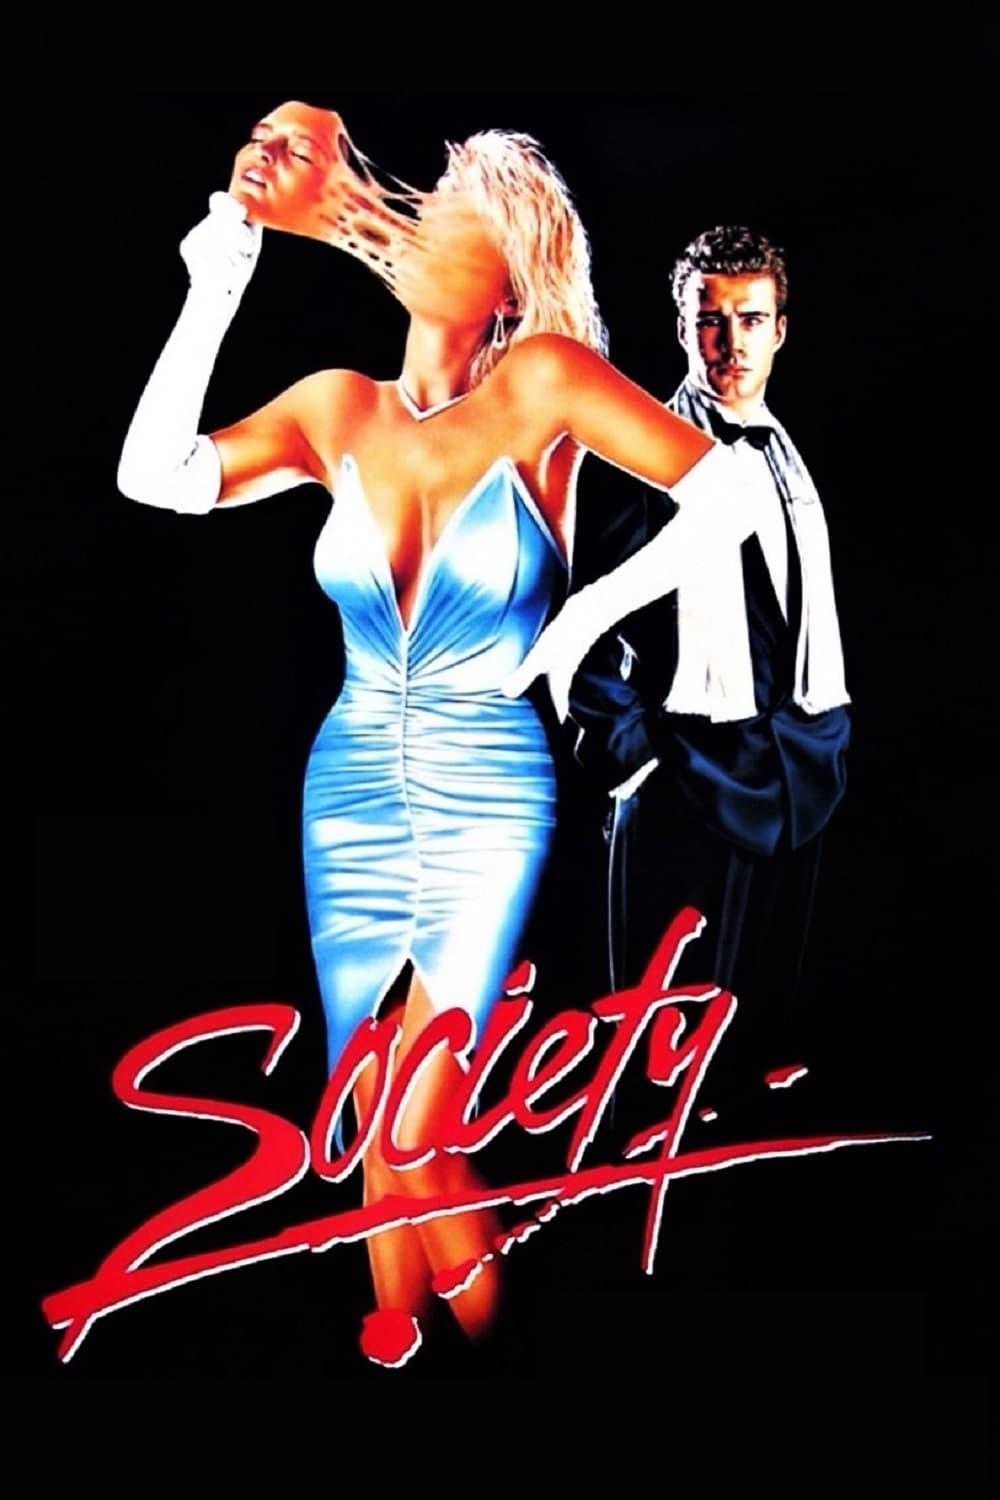 Society poster